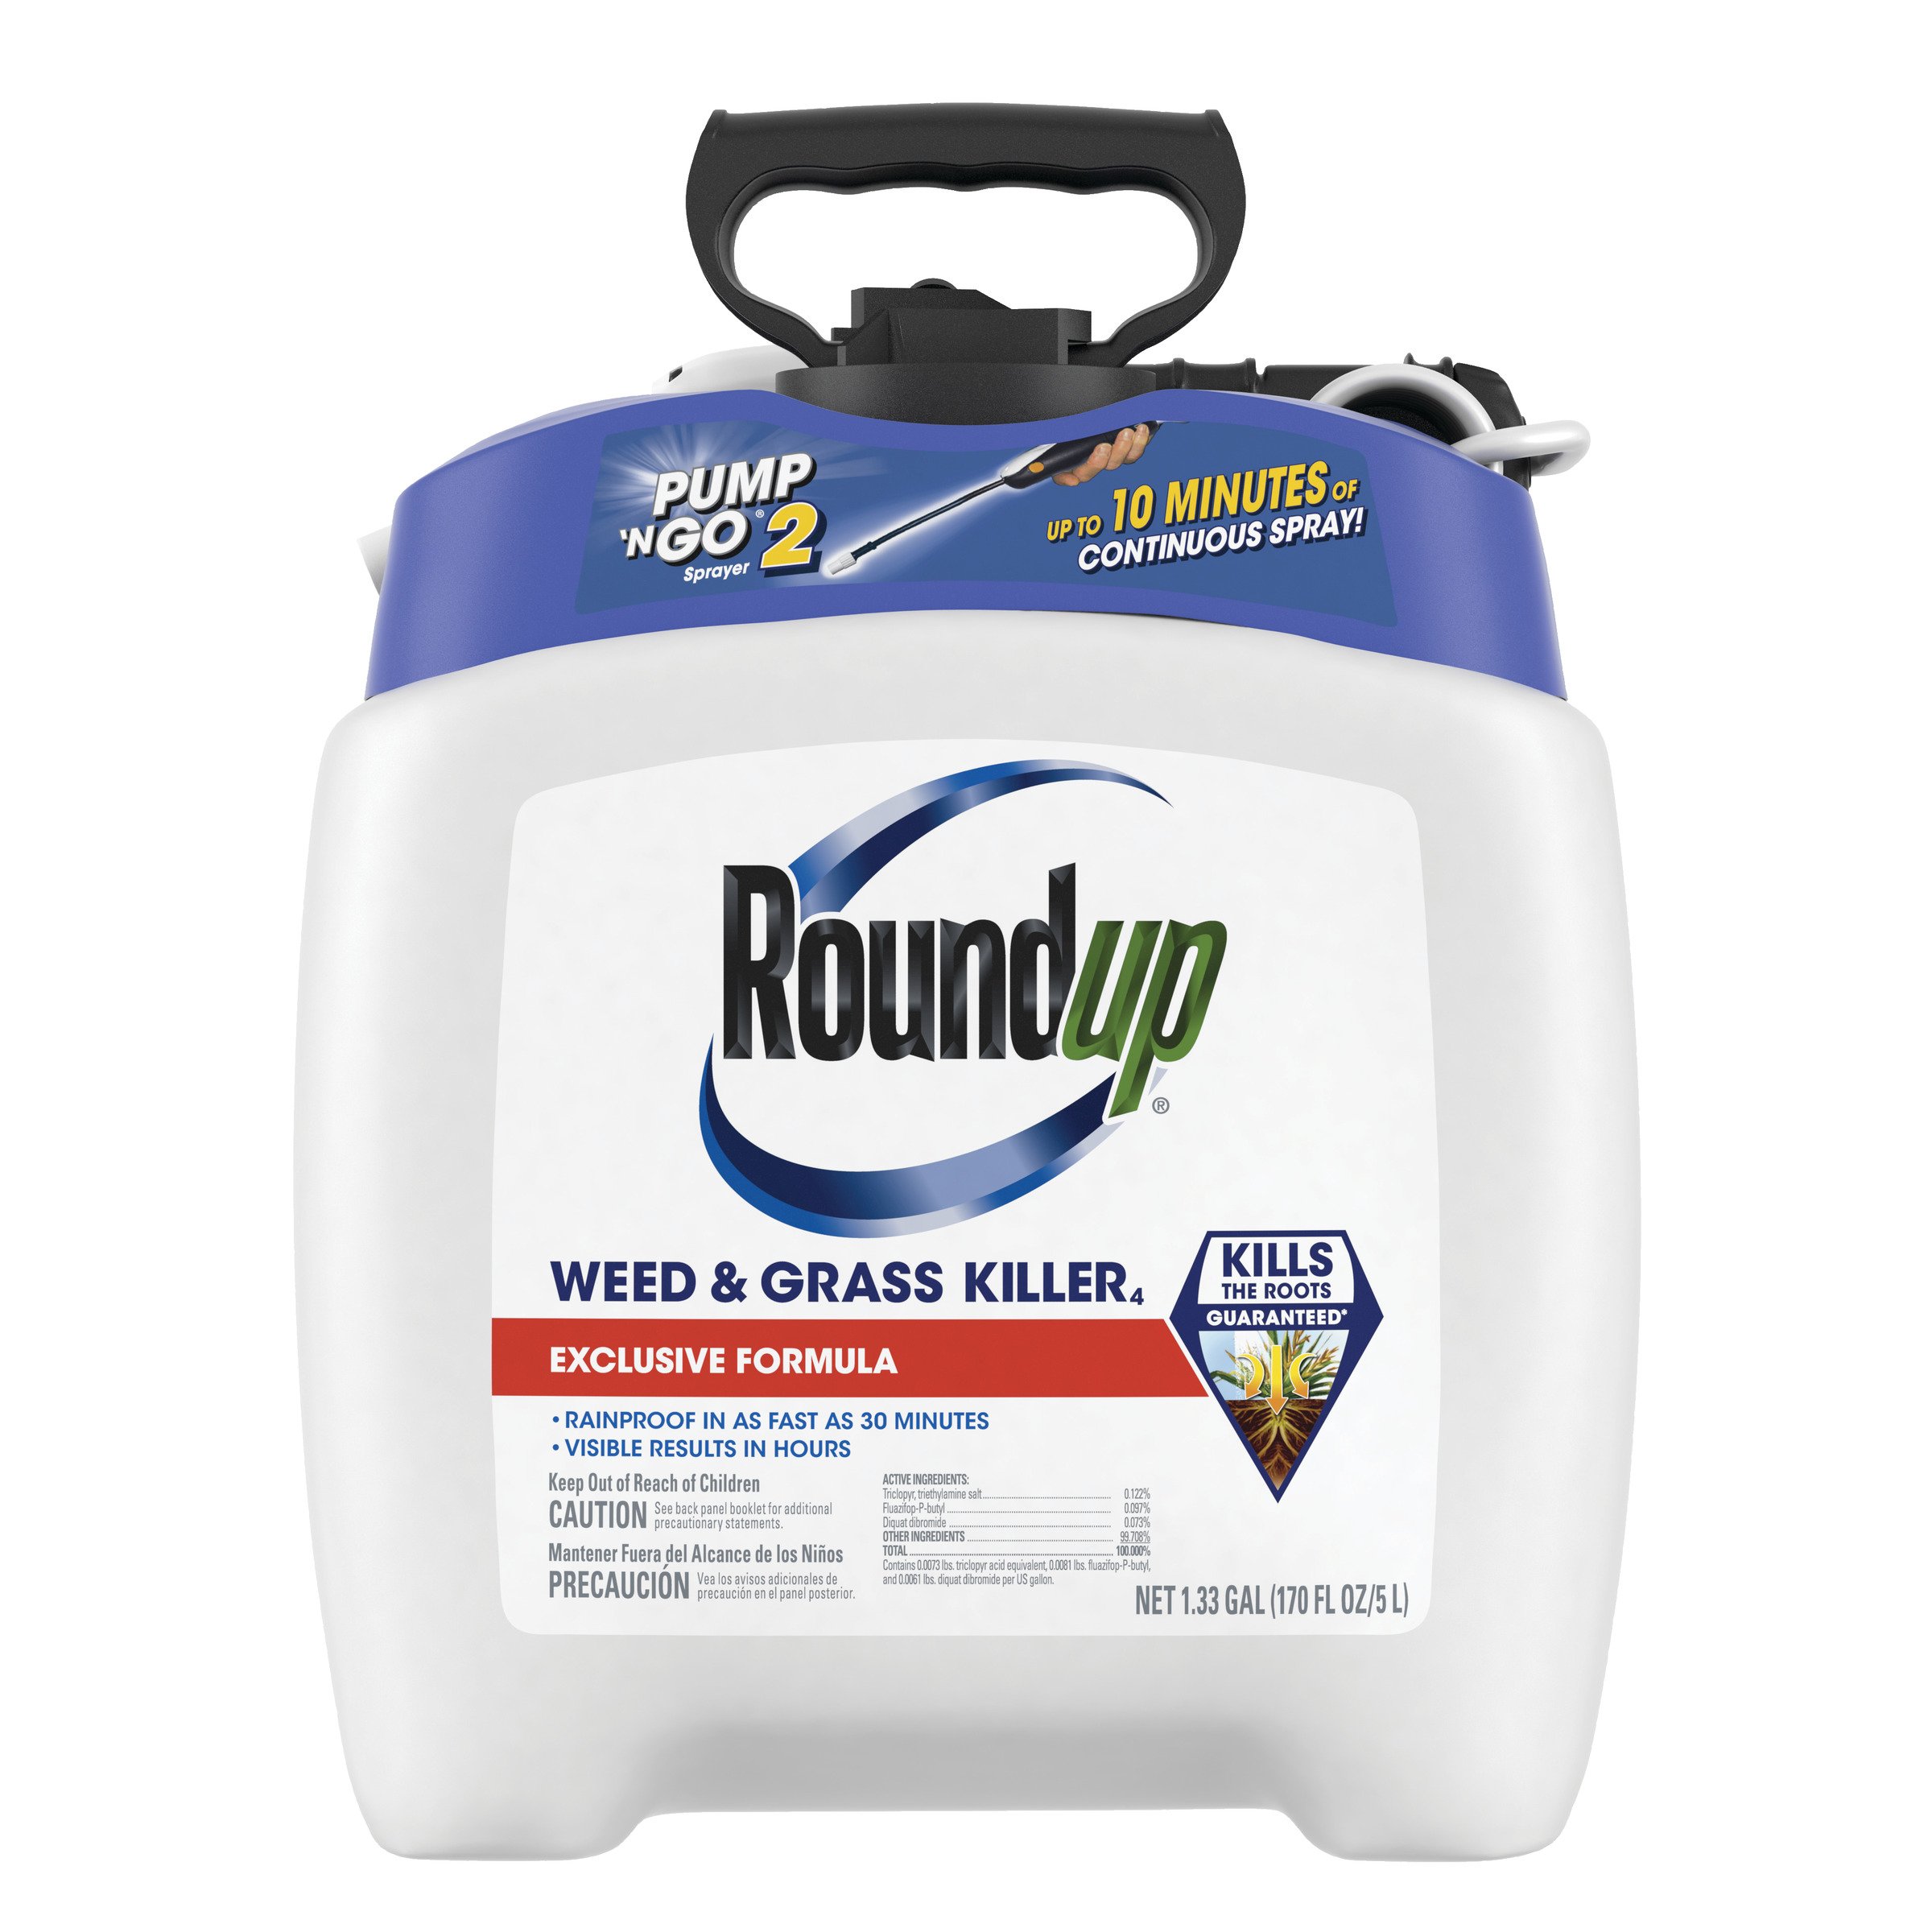 Roundup Weed & Grass Killer Pump 'N Go 2 Sprayer, 1.33 Gallon Jug